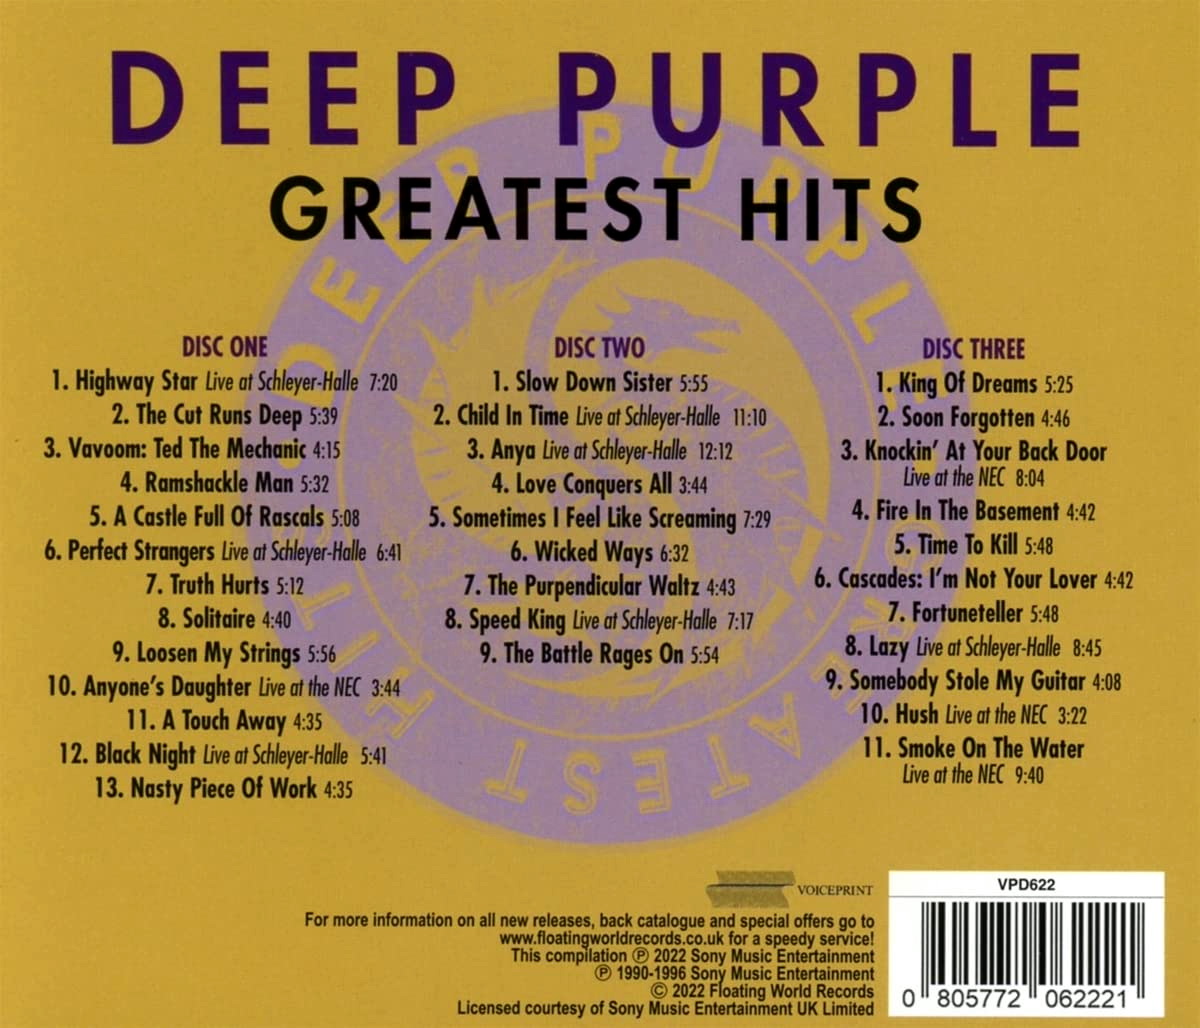 Дип перпл хиты слушать. Deep Purple 2022 - Gold Greatest Hits (Box Set 3cd)обложка. 2022 - Gold Greatest Hits (Box Set 3cd). Deep Purple - Greatest Hits (2022). Deep Purple 2022.